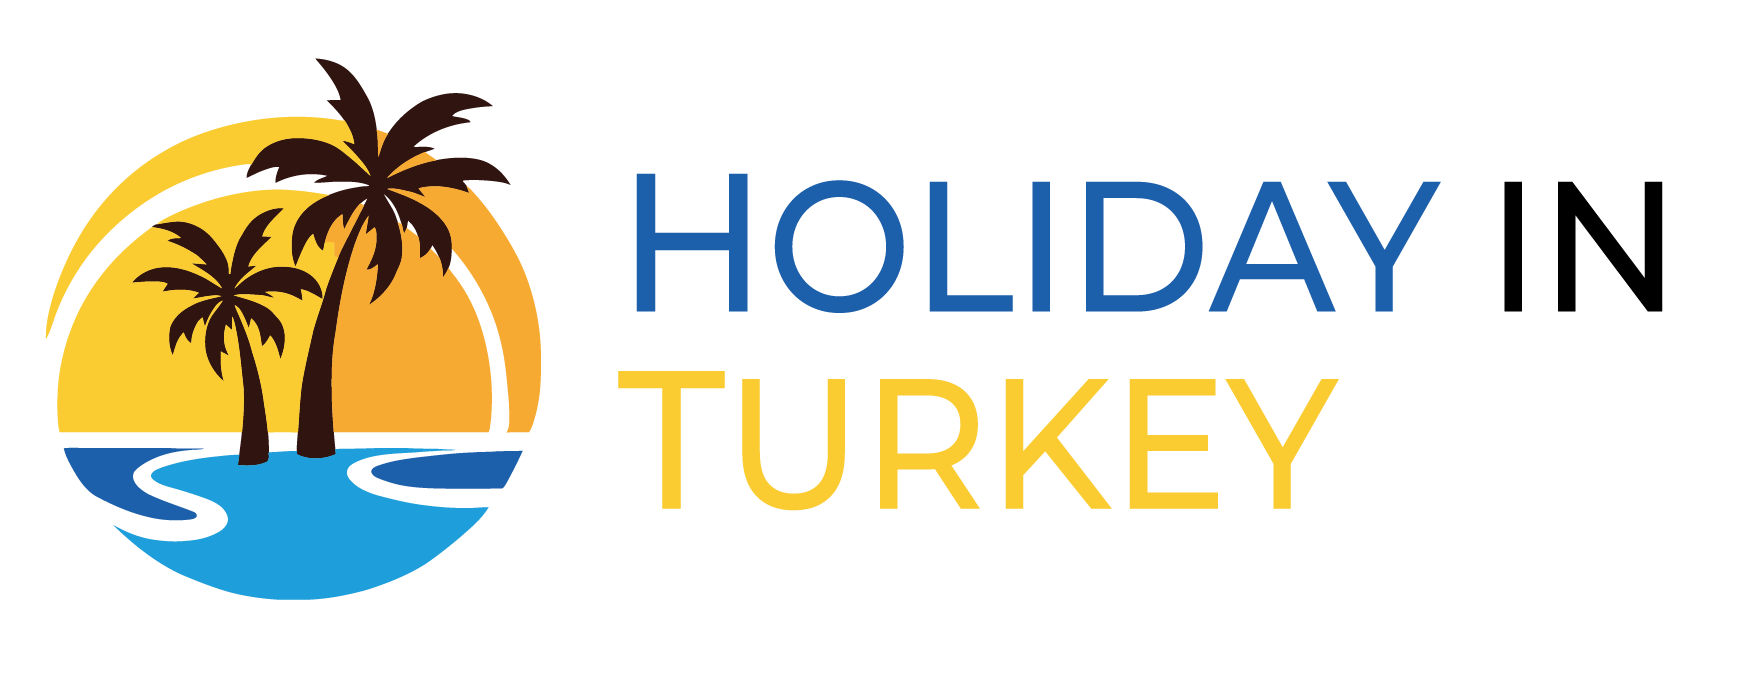 Holiday in Turkey